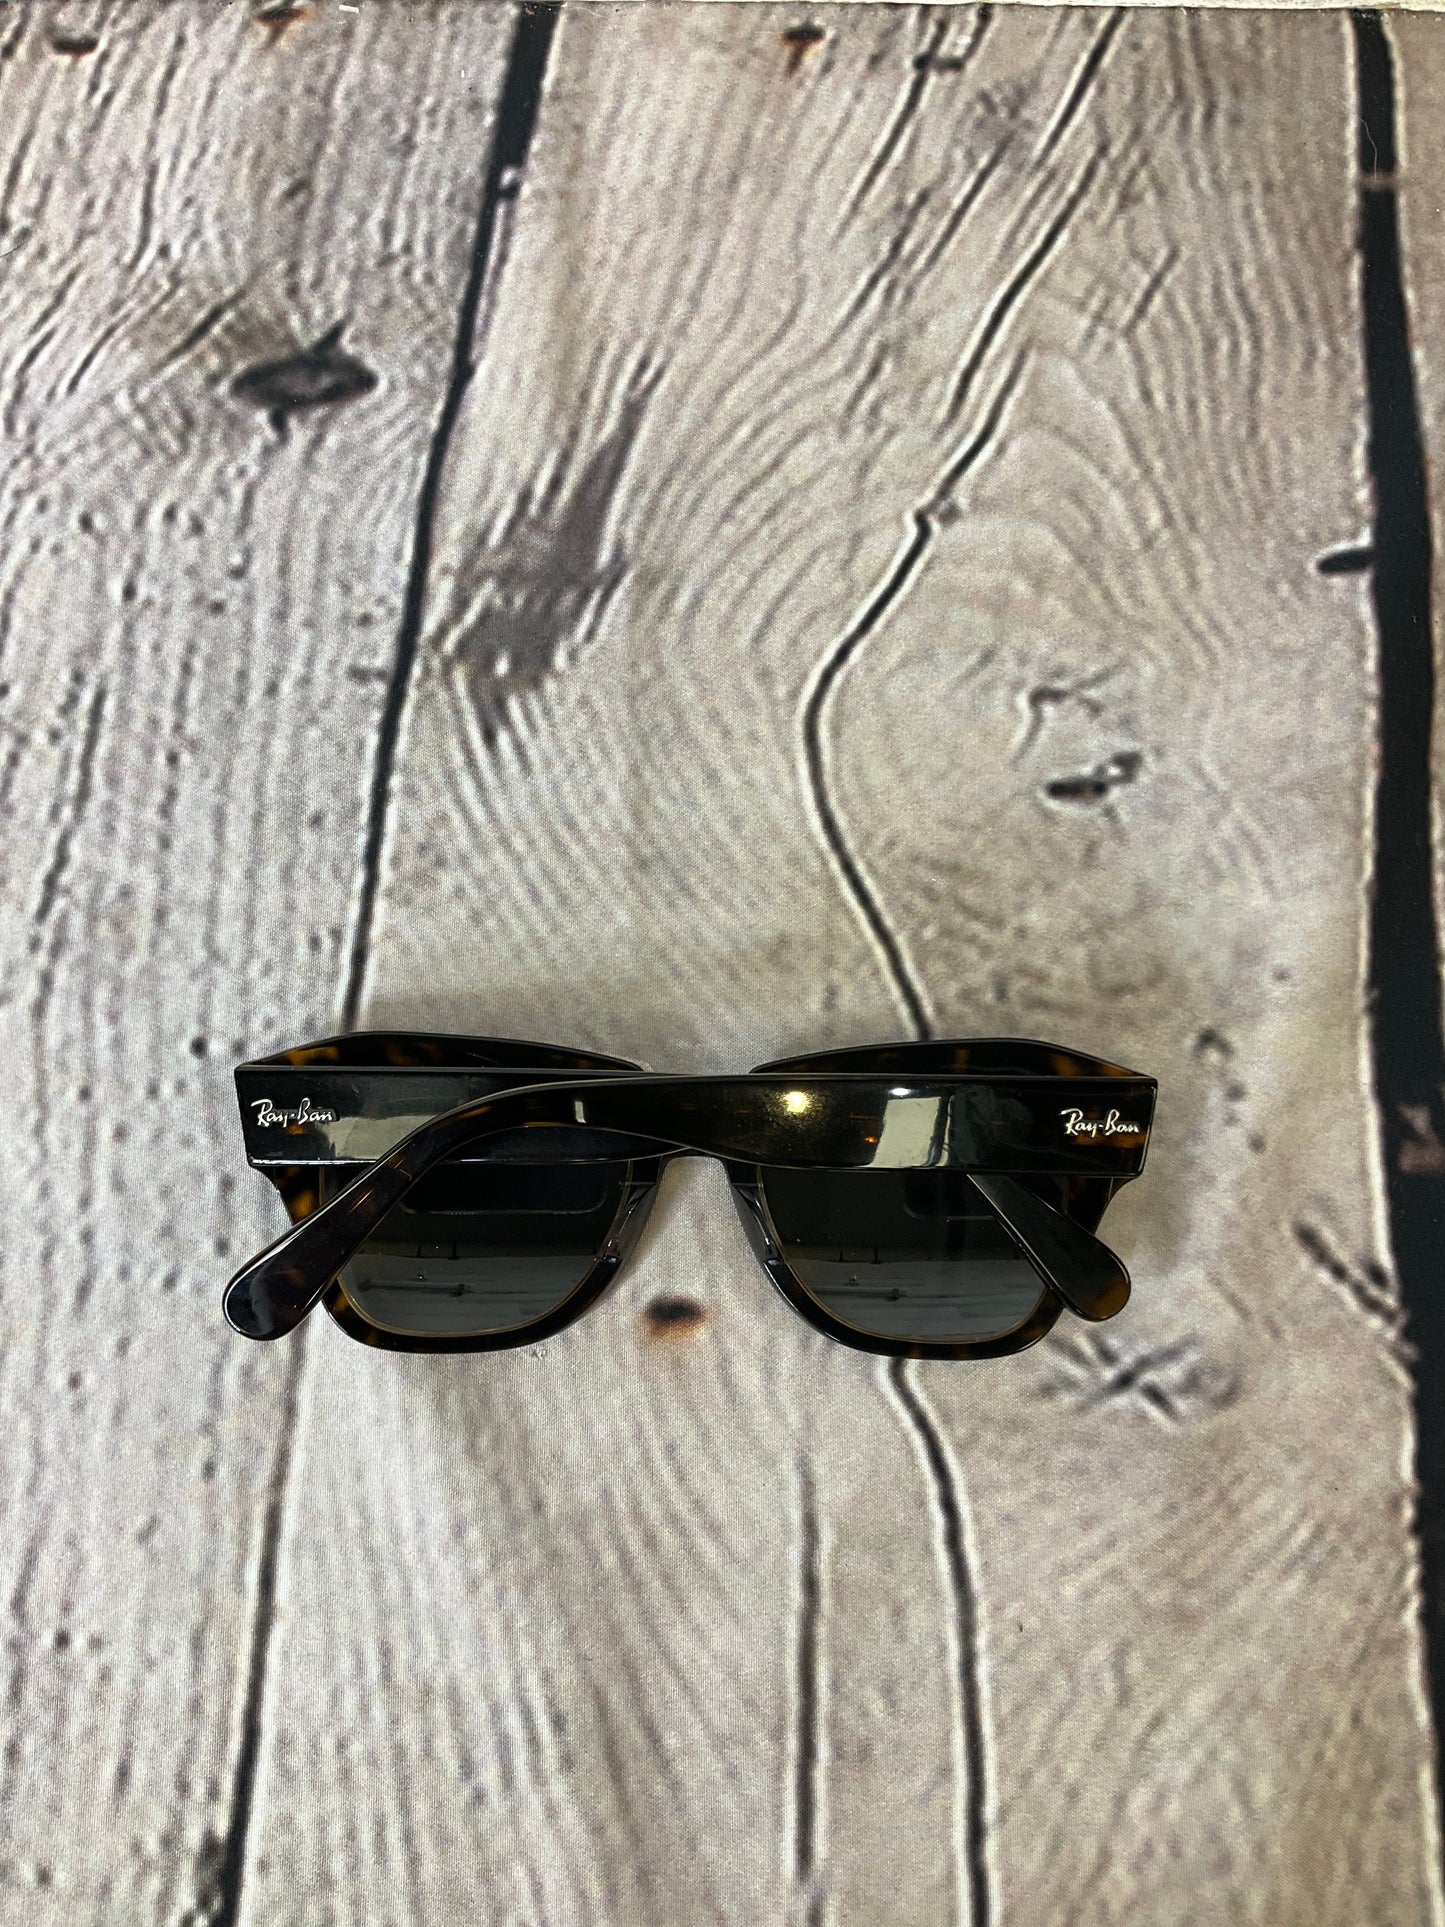 Sunglasses Ray Ban, Size 01 Piece